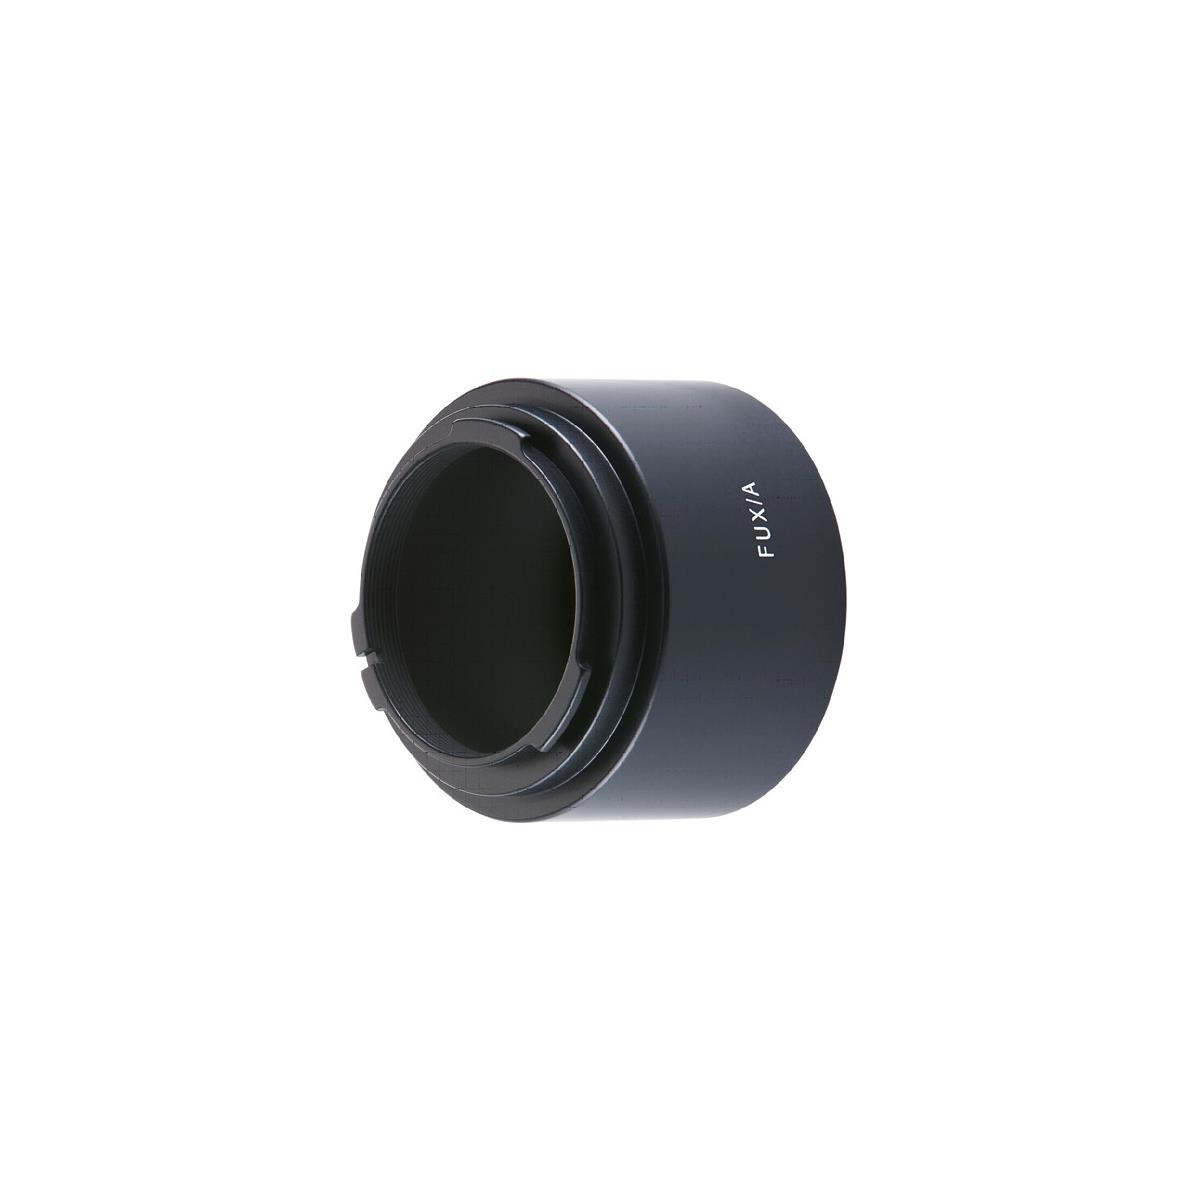 Image of Novoflex Universal Bellows Adapter for A-Mount Lens to Fujifilm X-Mount Camera